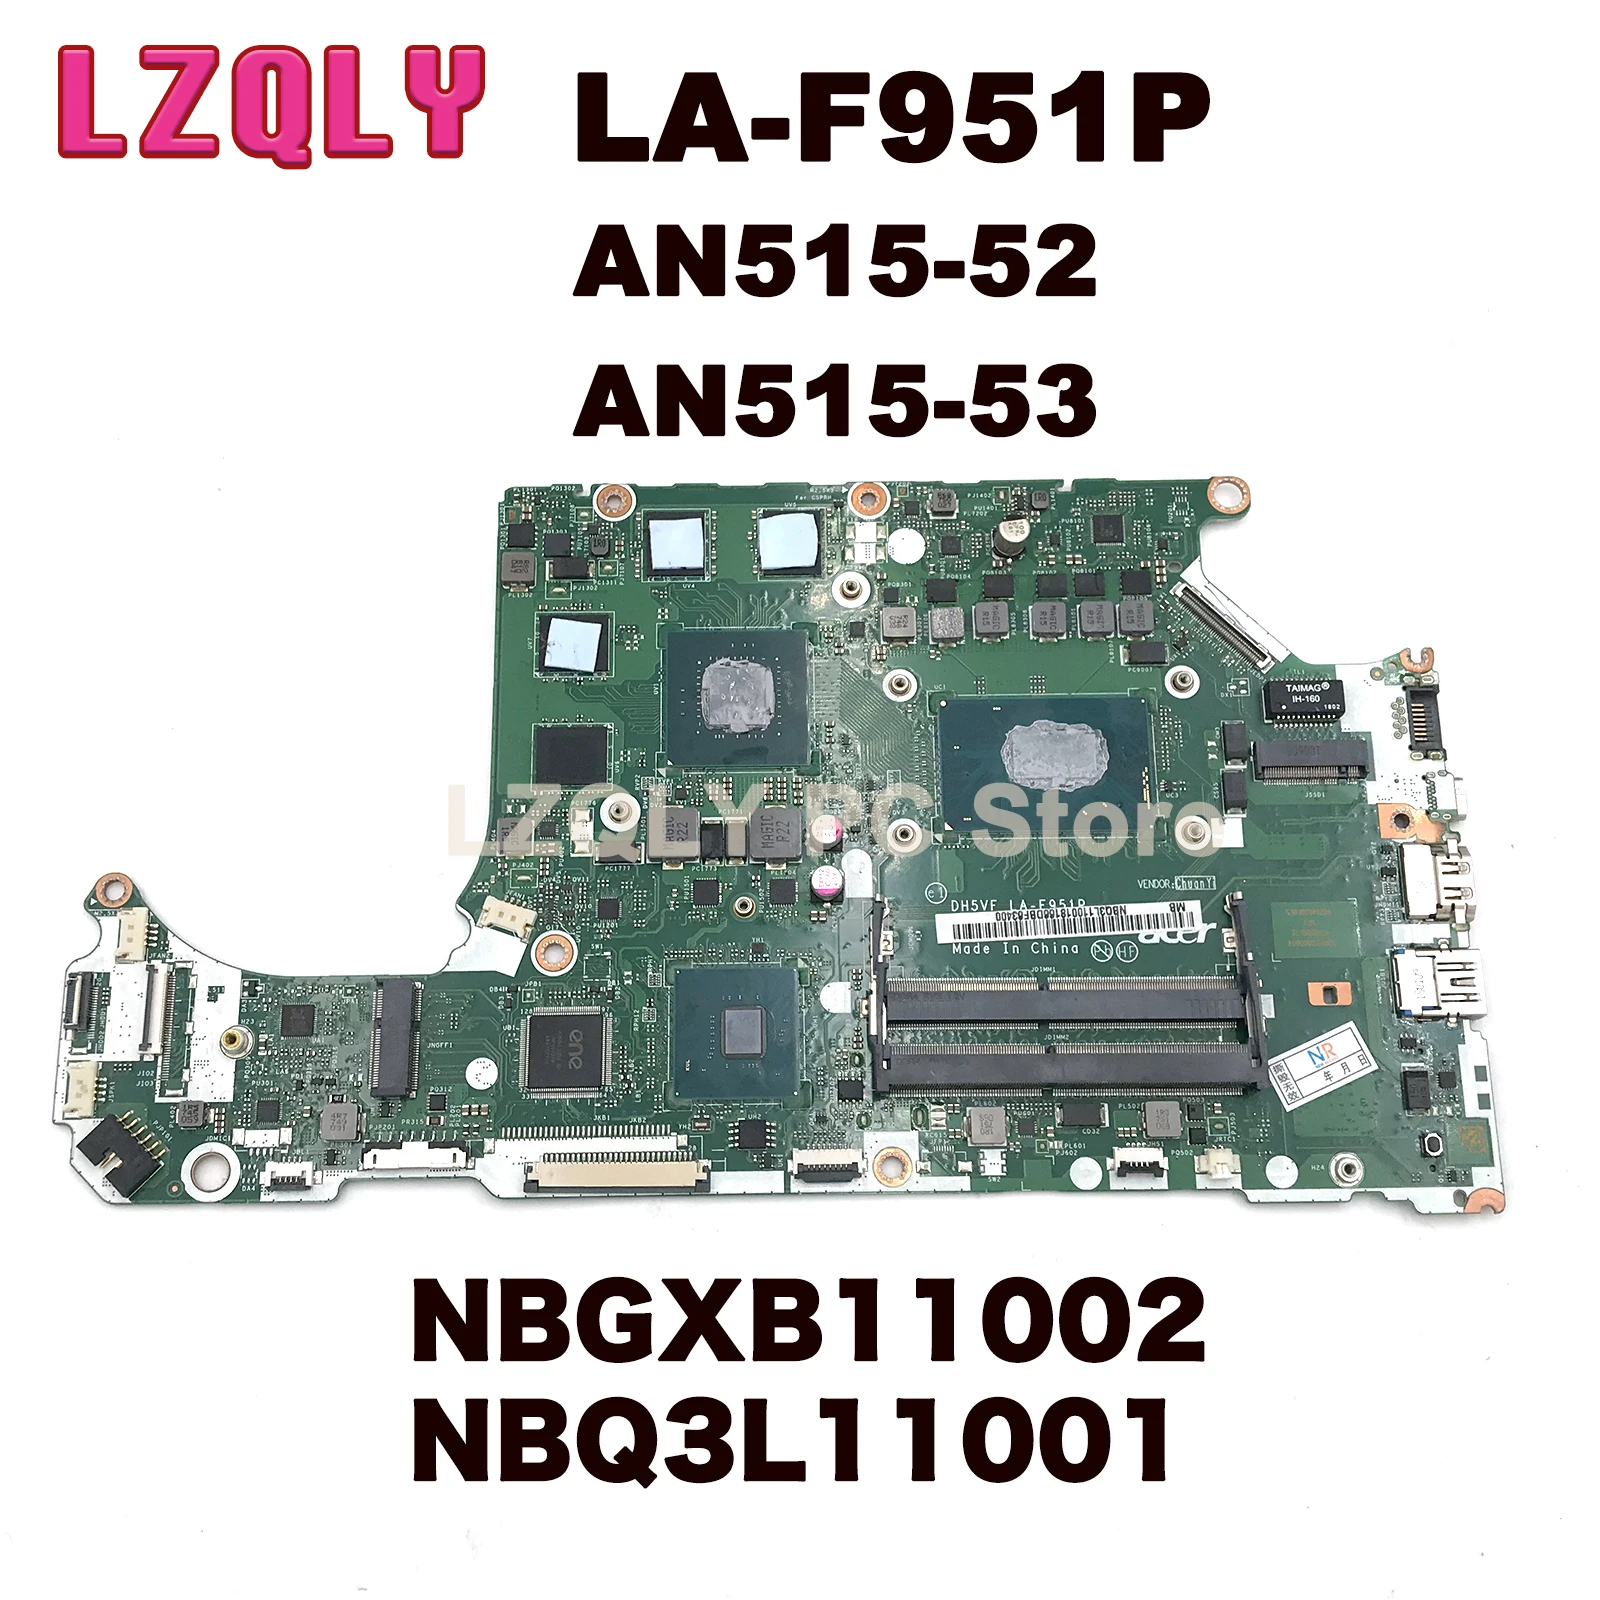 

For Acer AN515-52 AN515-53 Asipre 7 AN715-72G LA-F951P NBGXB11002 NBQ3L11001 Laptop Motherboard I5 I7CPU GeForce GTX 1050 4G